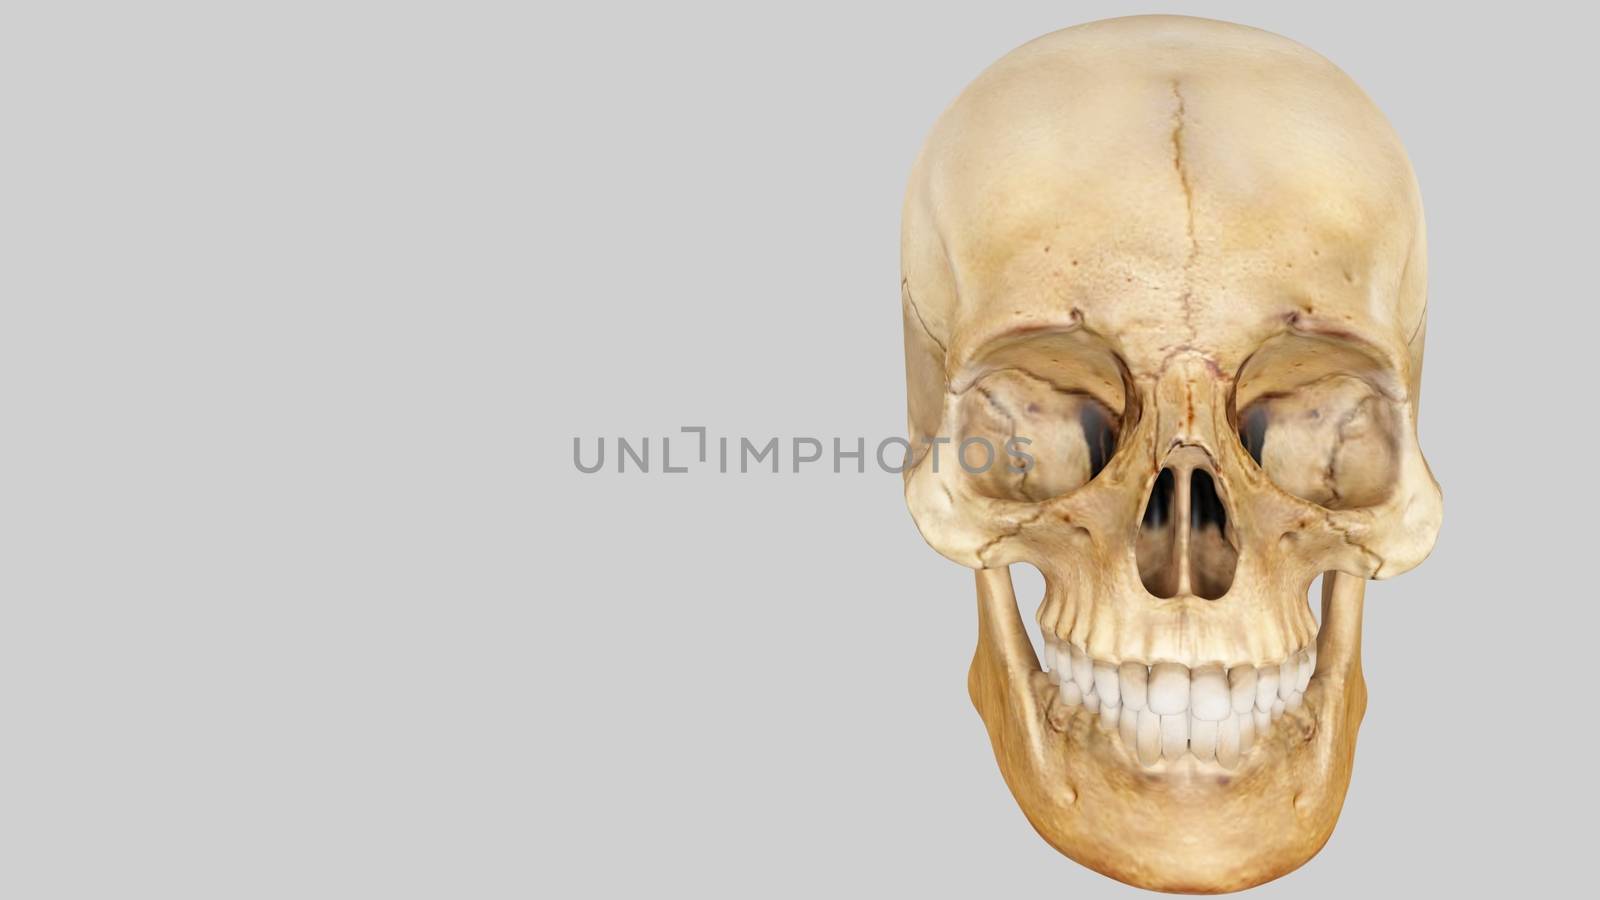 artifical human skull on white background, skull by Maharana777